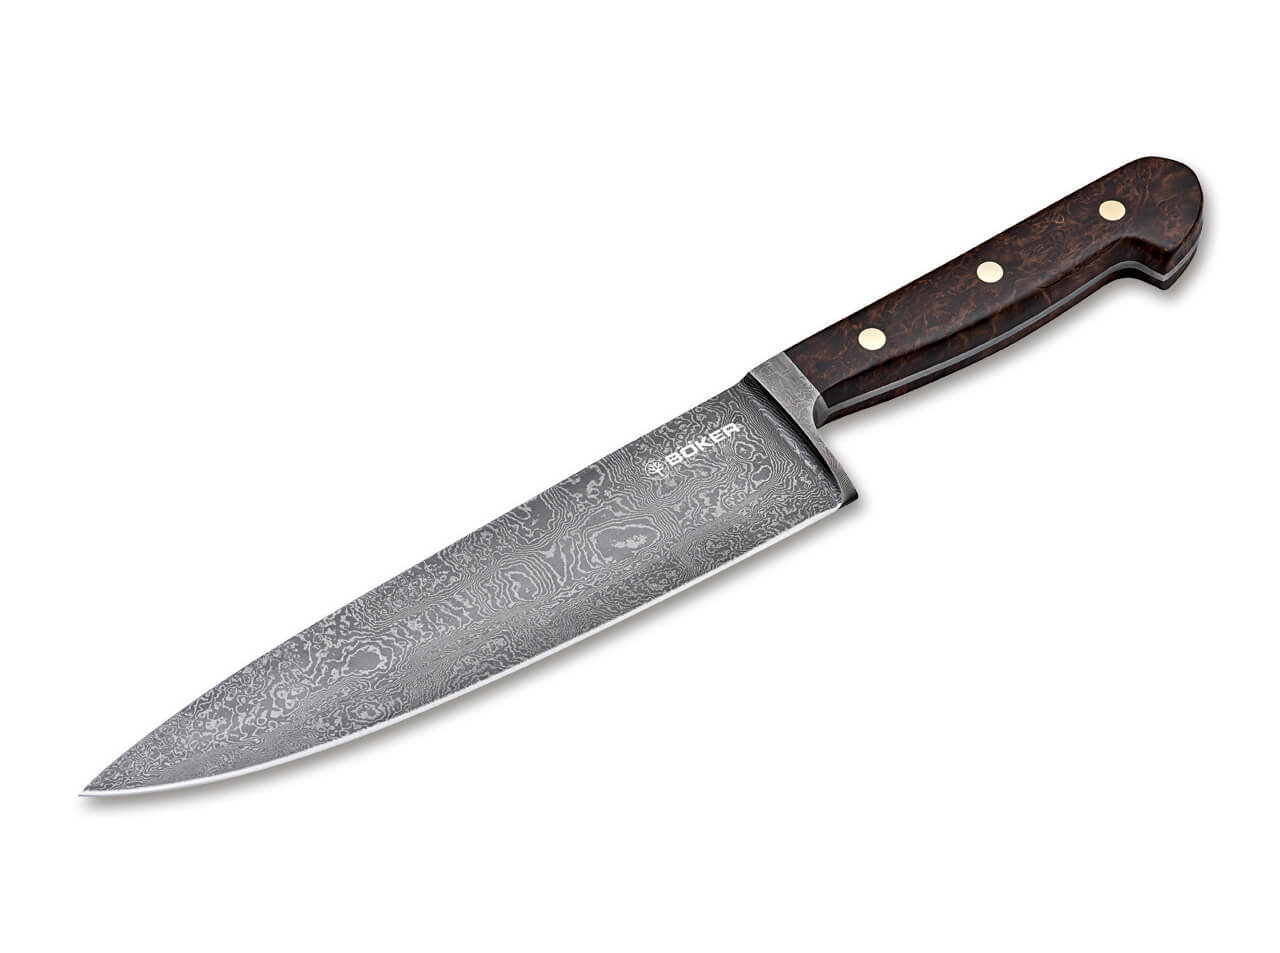 CF-64 handmade Damascus Steel Chef Knife - Walnut Wood Handle